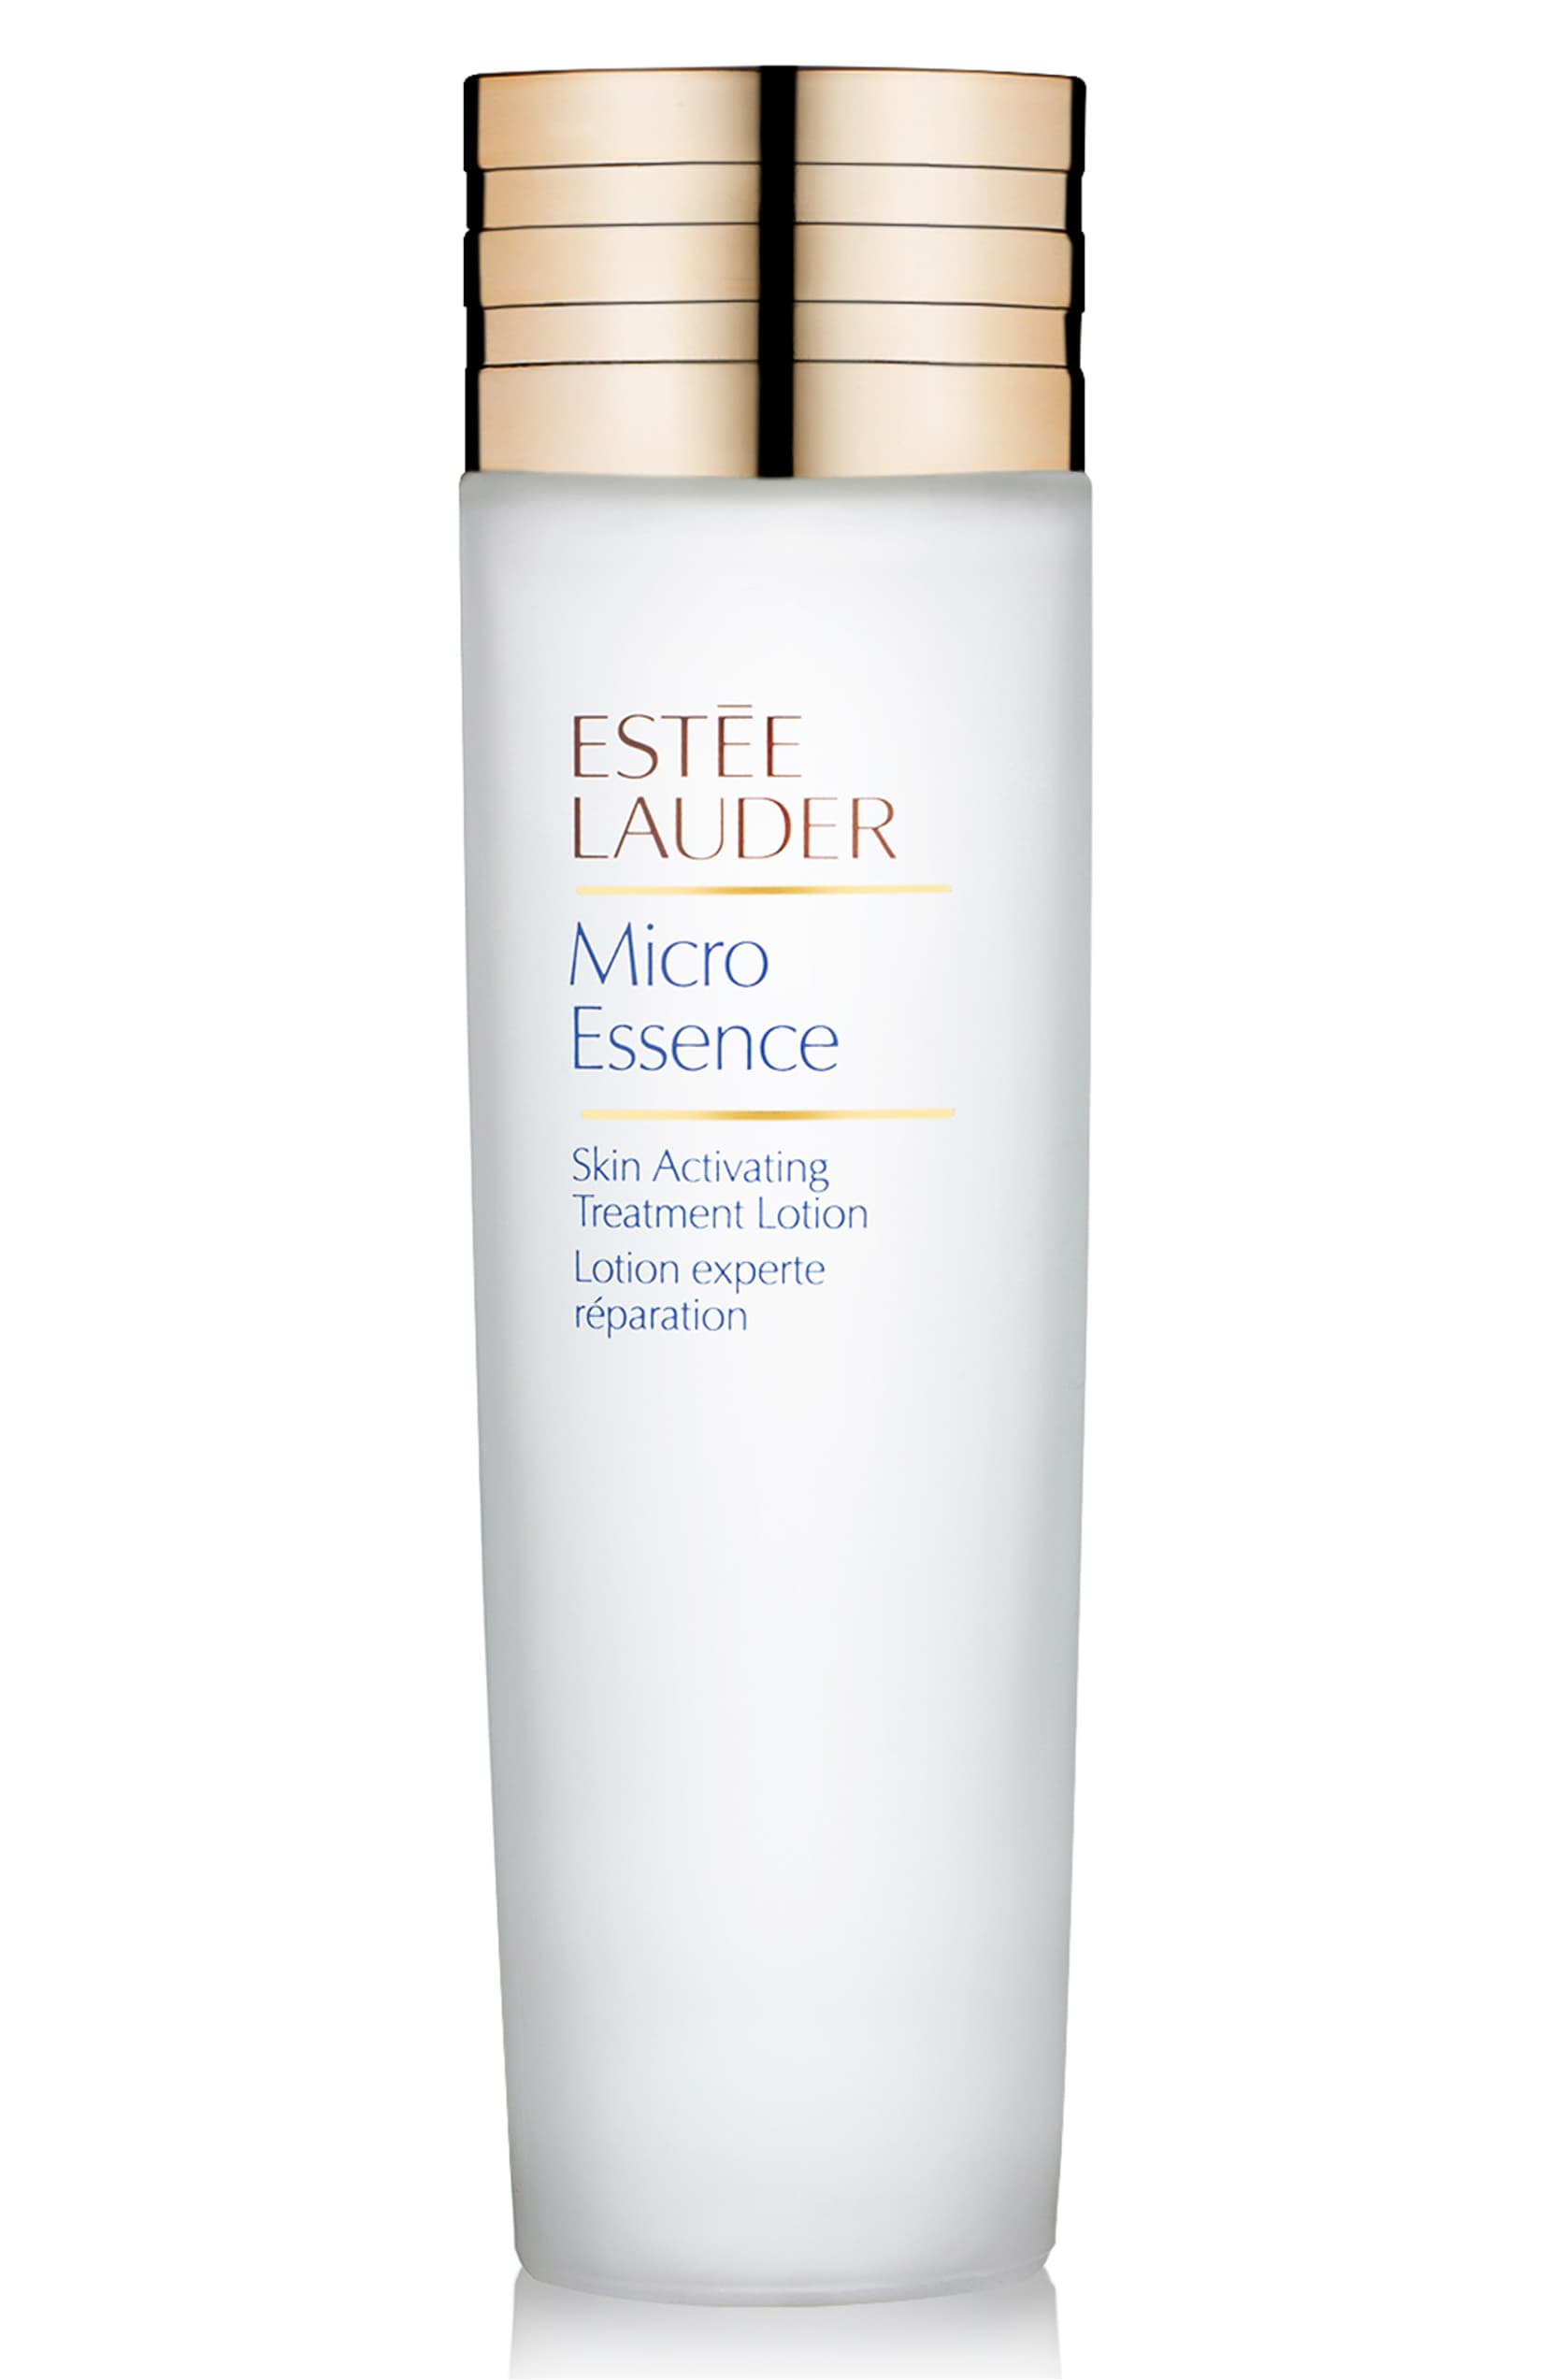 Estee Lauder Micro Essence Skin Activating Treatment Lotion, 2.5 oz / 75 ml - eCosmeticWorld